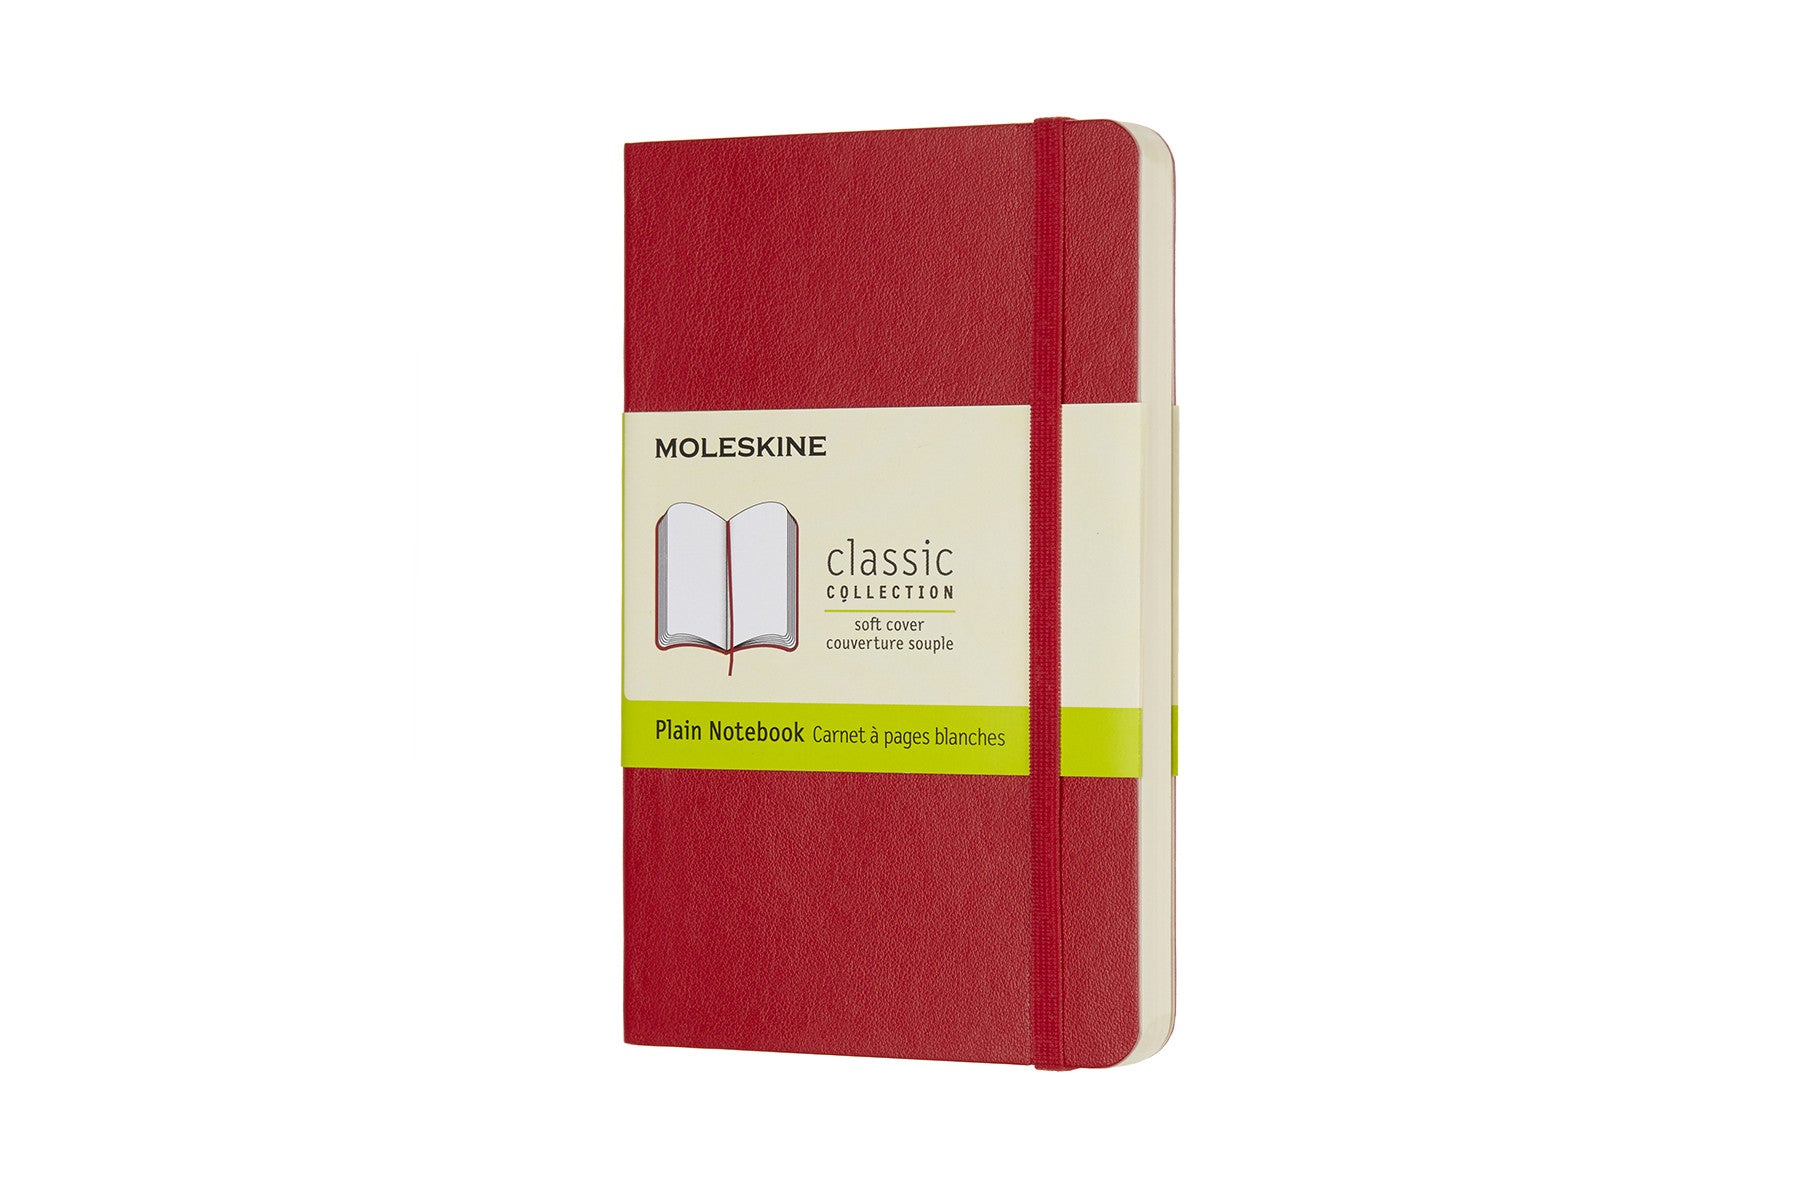 Moleskine notebook softcover pocket plain red